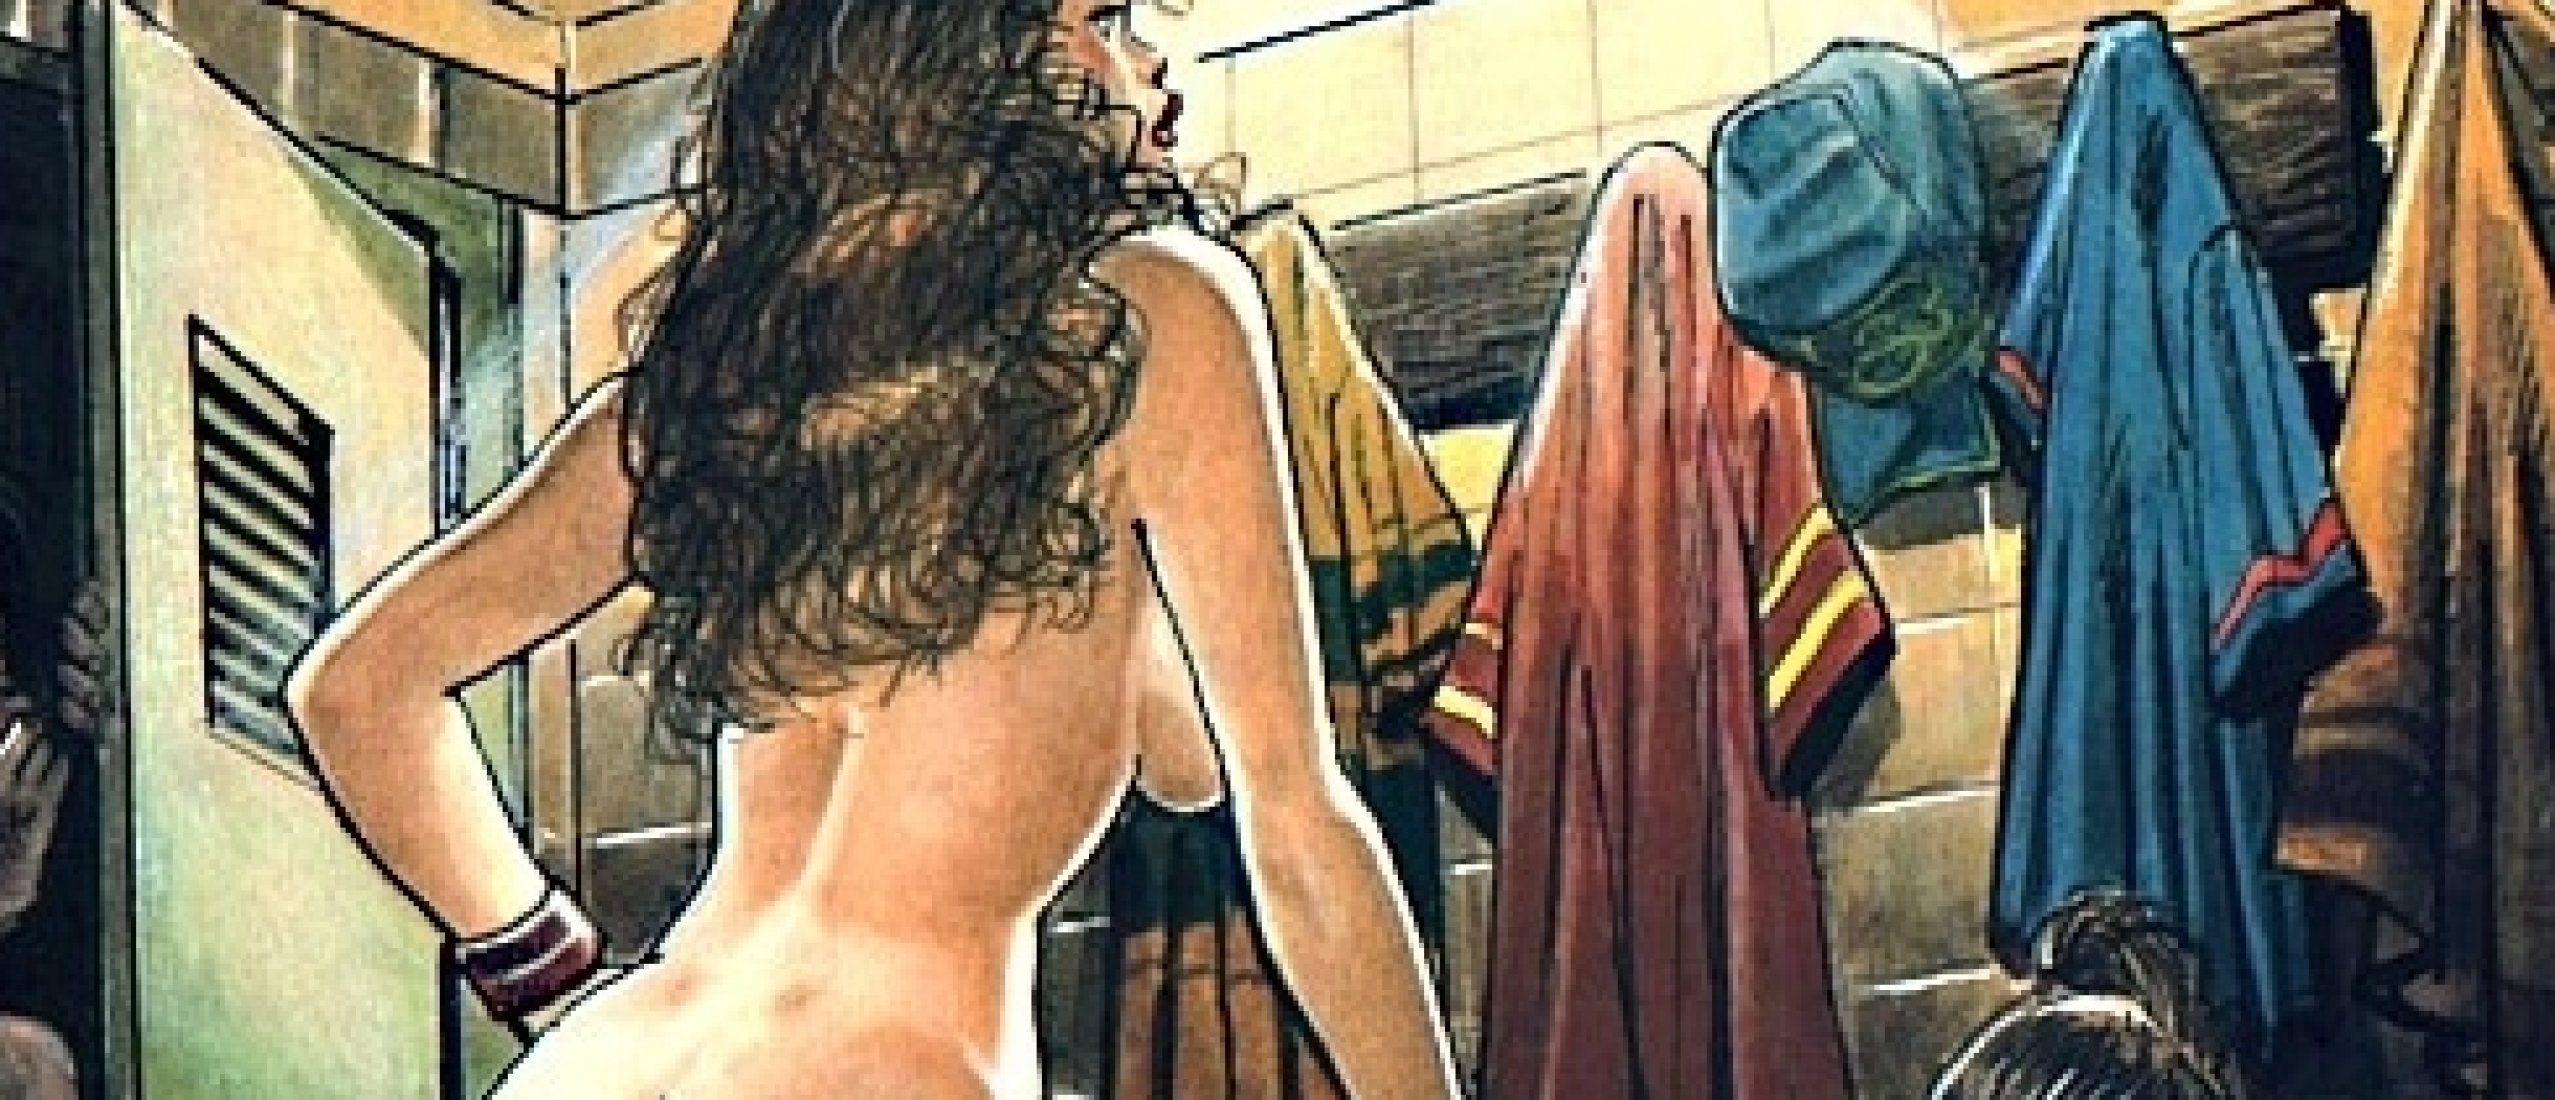 12 Magnificent Examples of Horacio Altuna's Erotic Comic Art